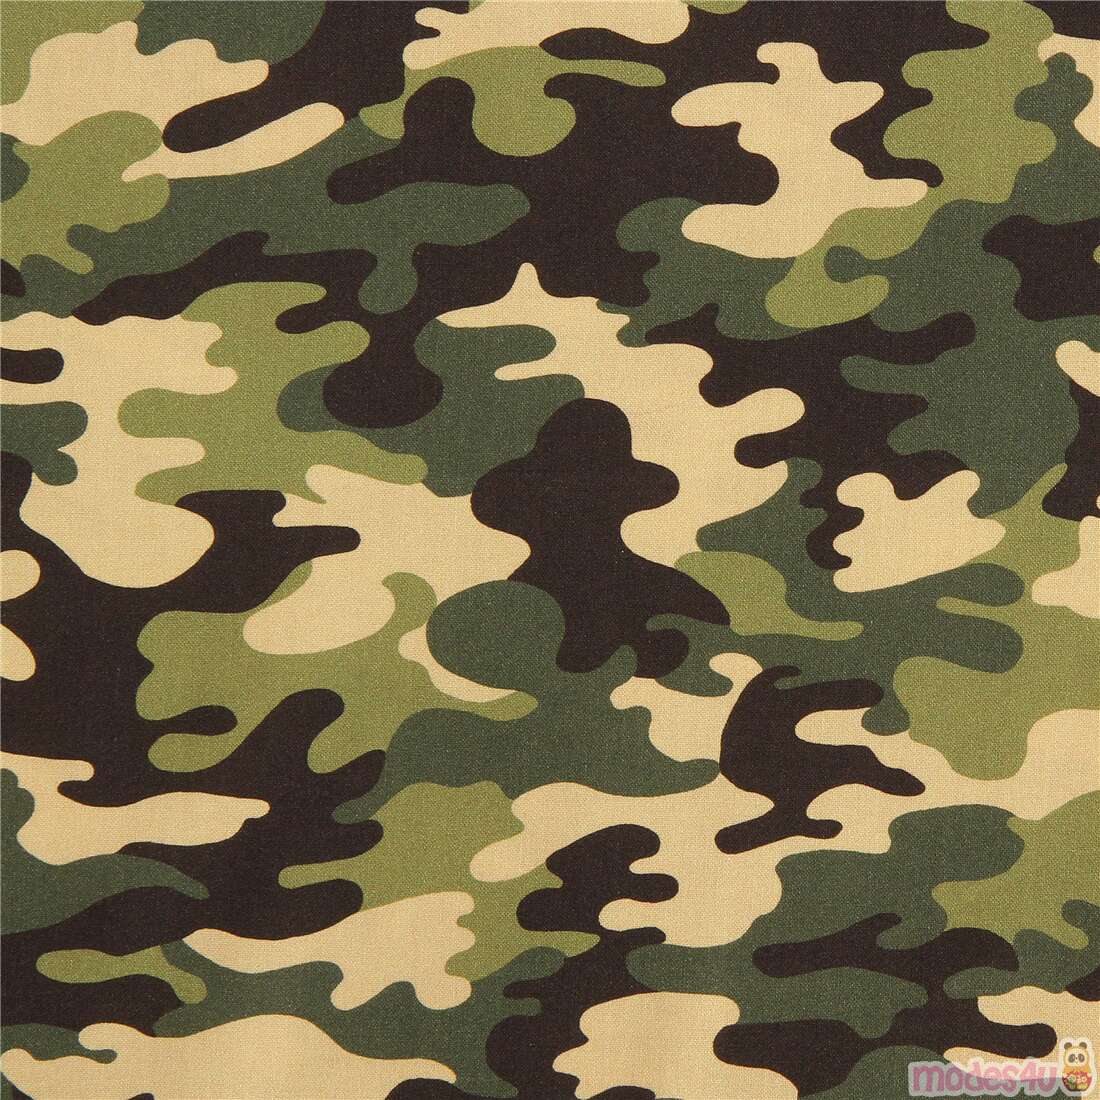 https://kawaii.kawaii.at/images/product_images/big_images/camouflage-green-army-print-cotton-fabric-by-Robert-Kaufman-244751-1.jpg